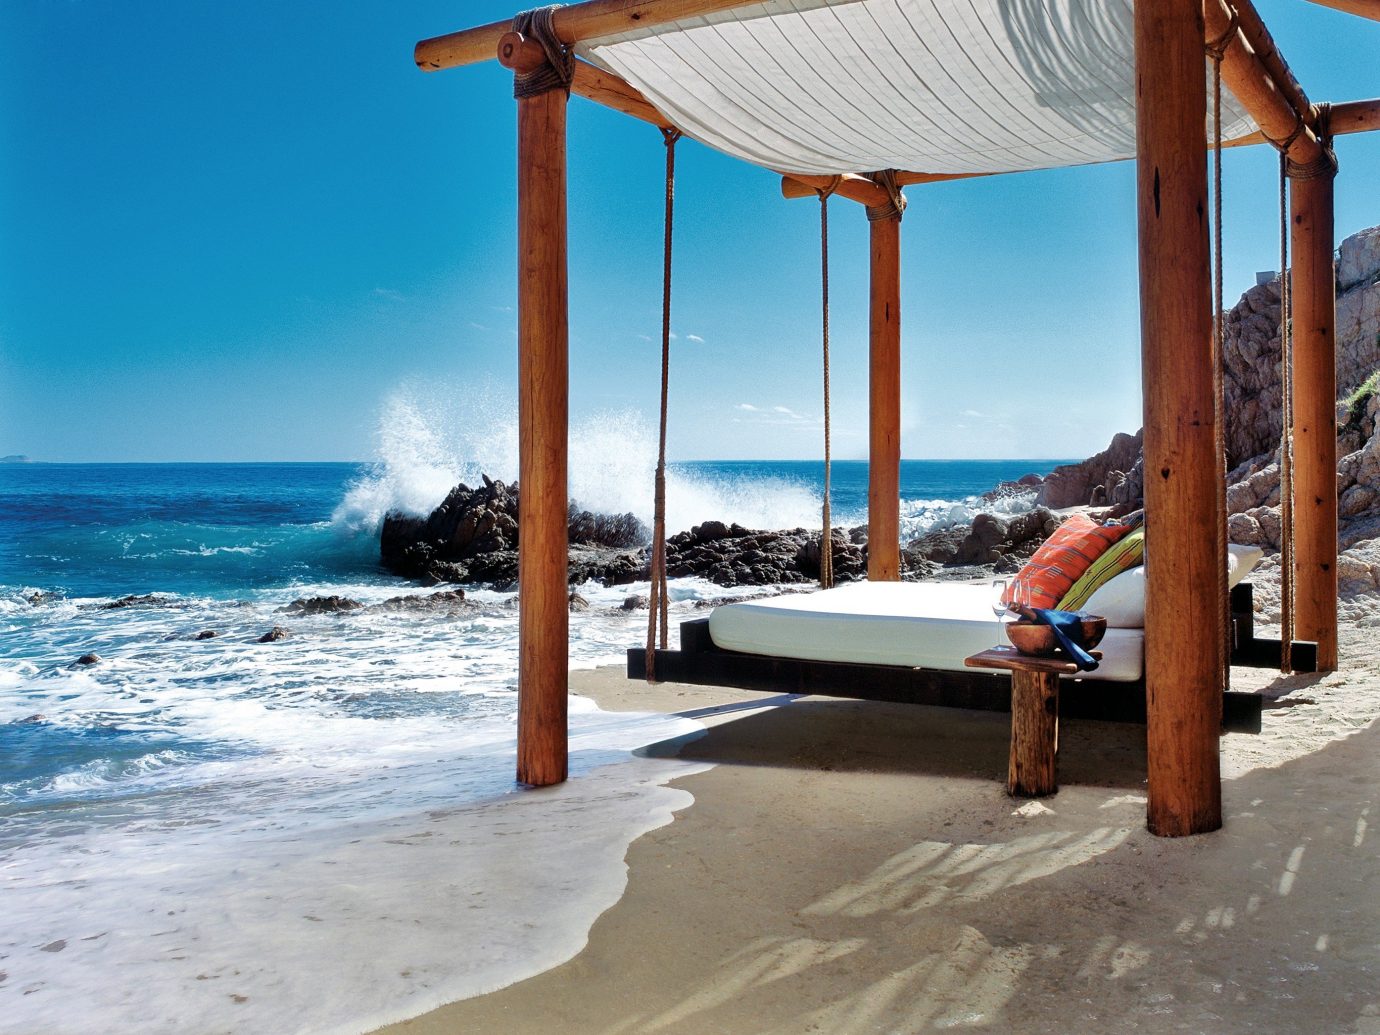 Hotels sky Beach outdoor leisure vacation Ocean Sea Resort caribbean swimming pool estate walkway shore sandy